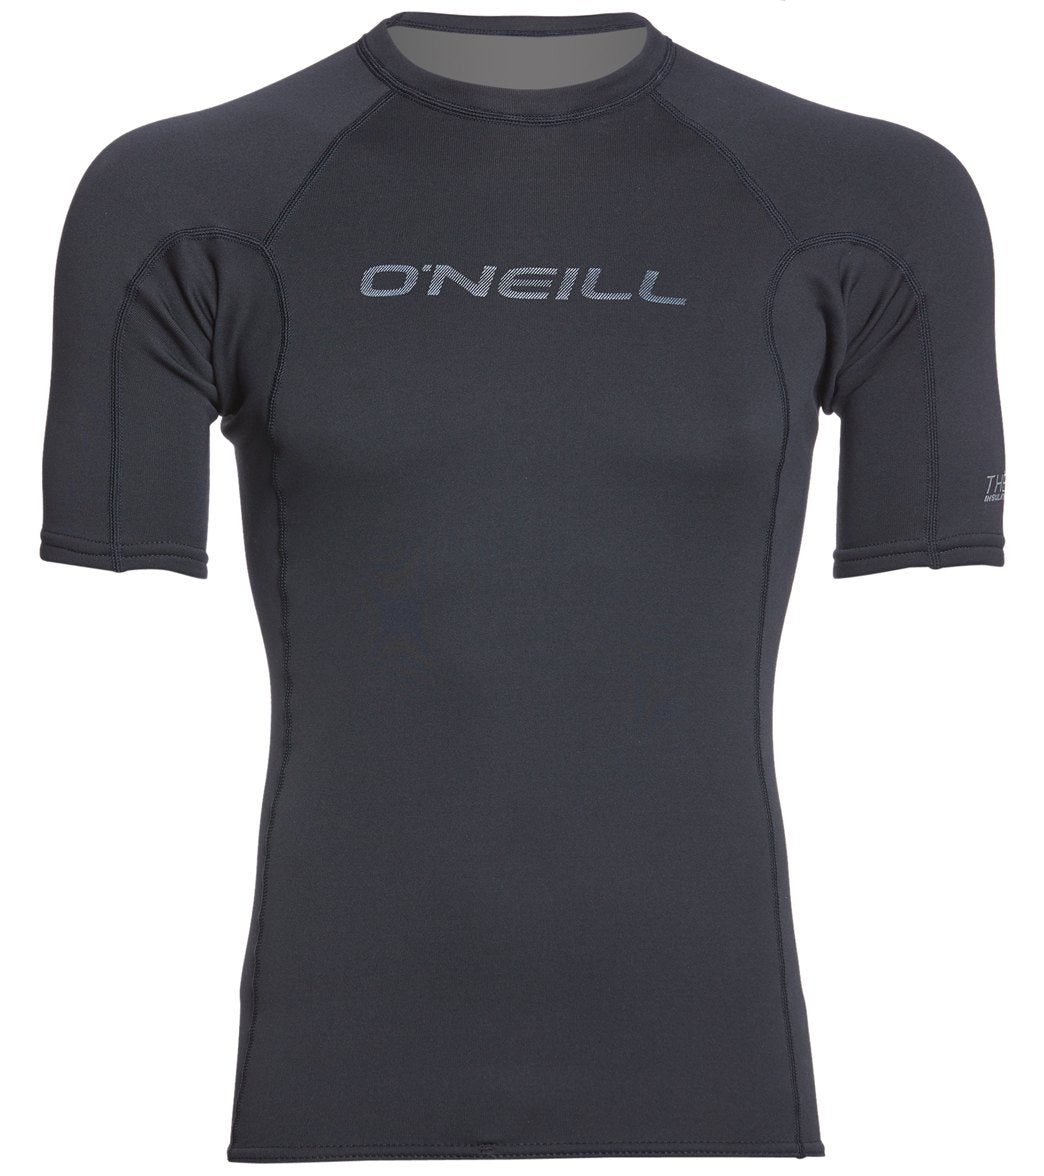 H2O Sport Tech Short Sleeve RAGLAN Swim Shirt NAVY #847B